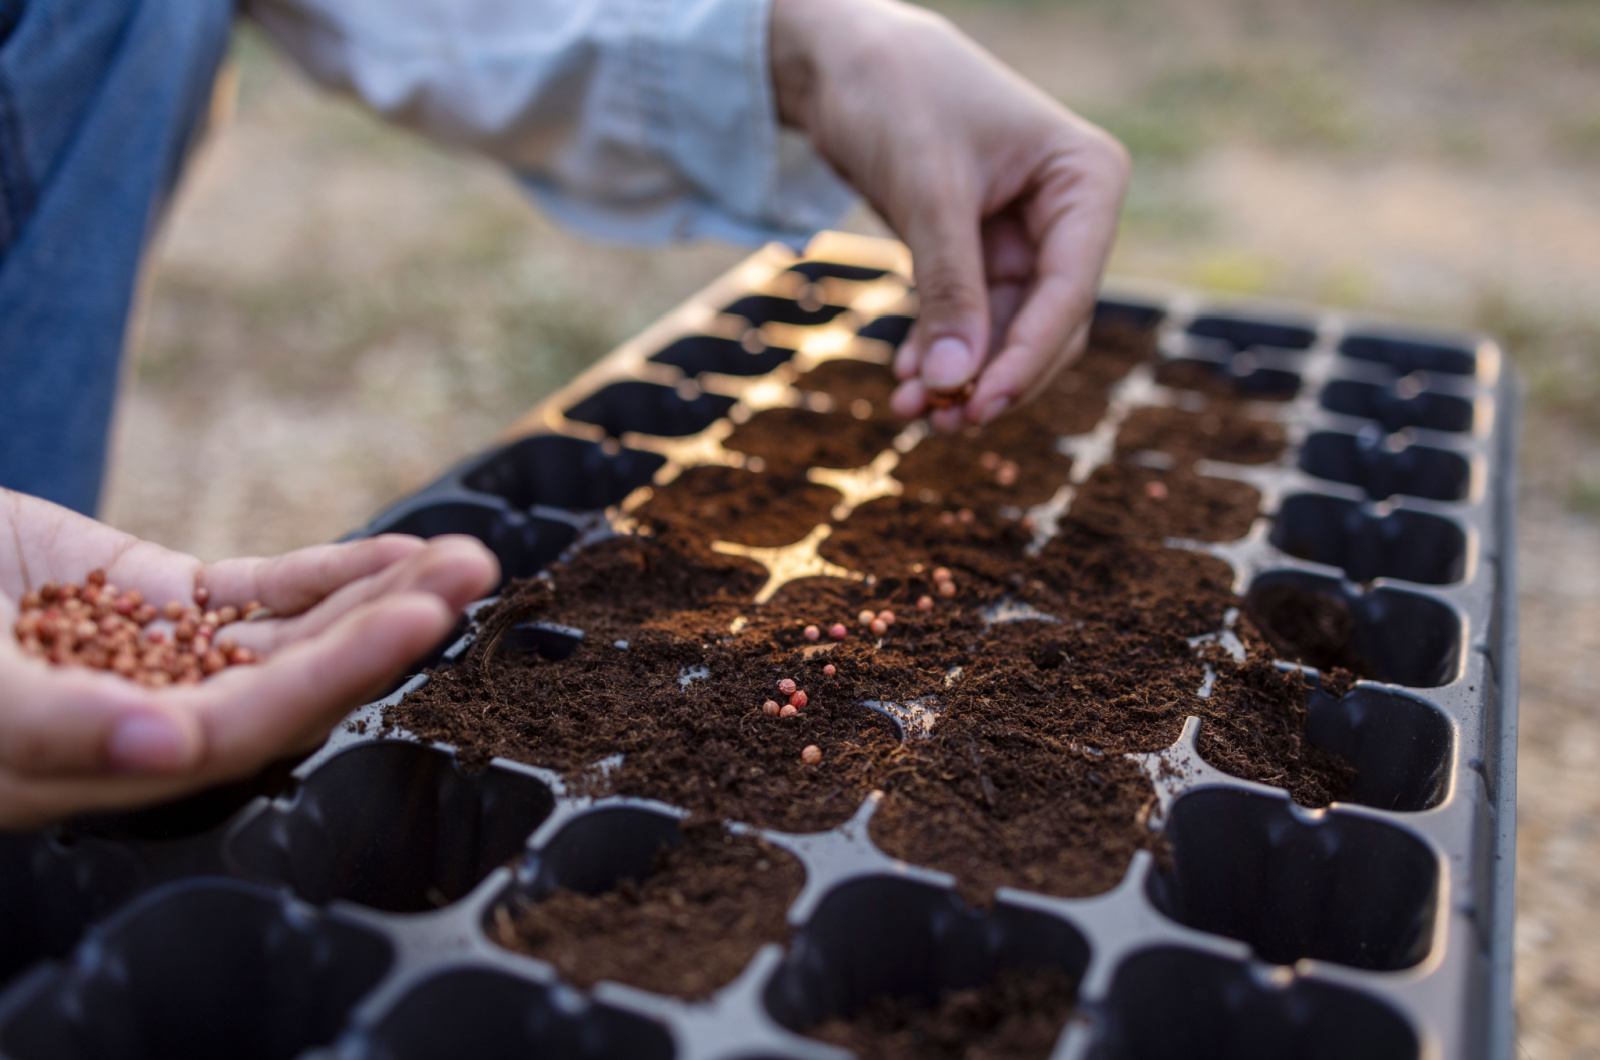 Farmer's hands put seeds in plastics trays